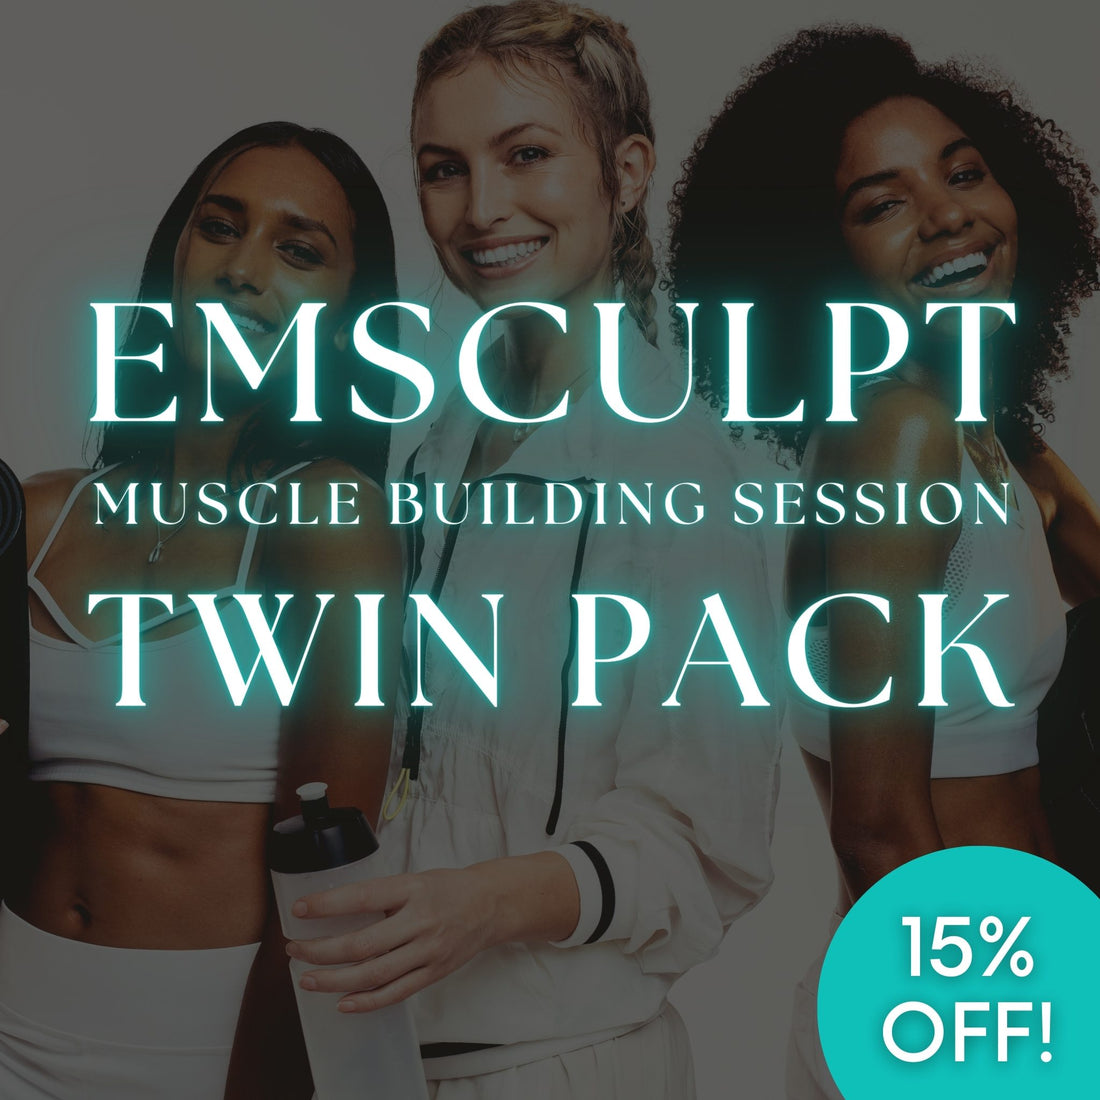 EMSCULPT Muscle Sculpting Twin Pack!